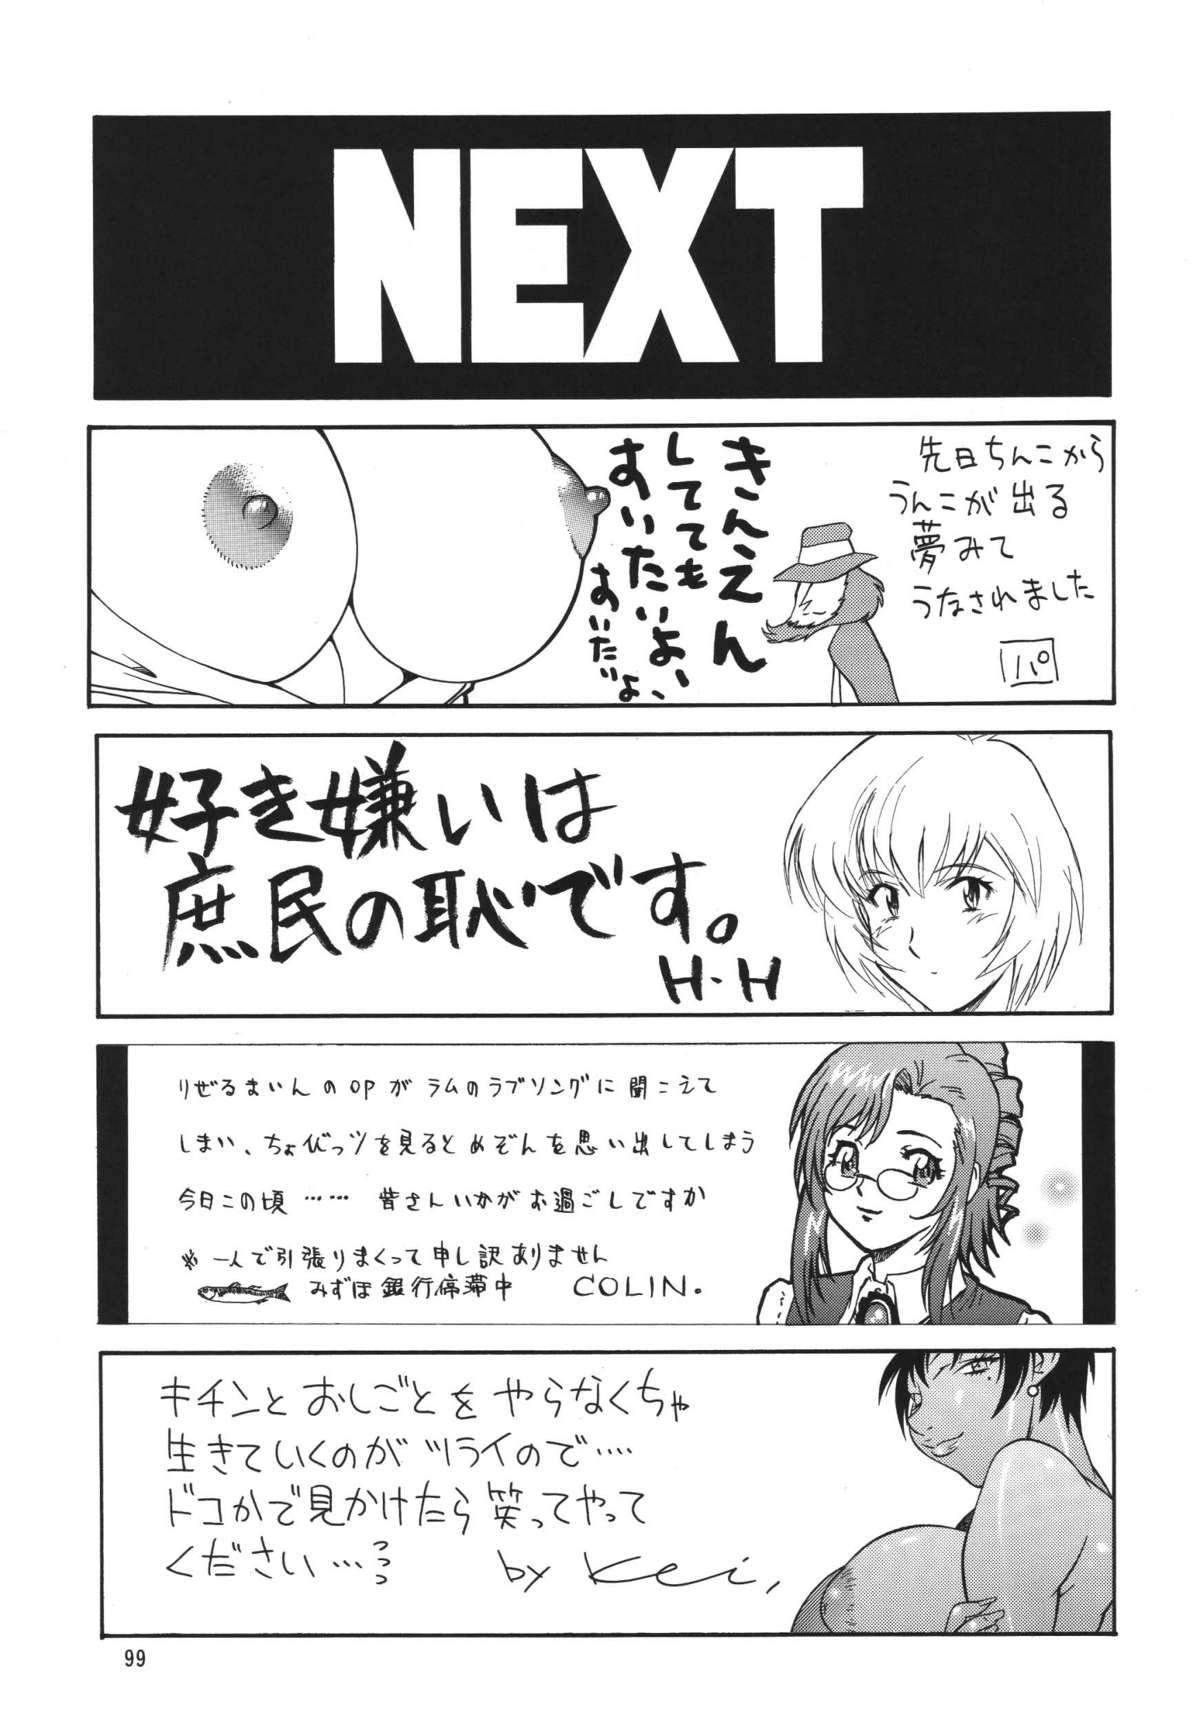 NEXT Climax Magazine 10 98